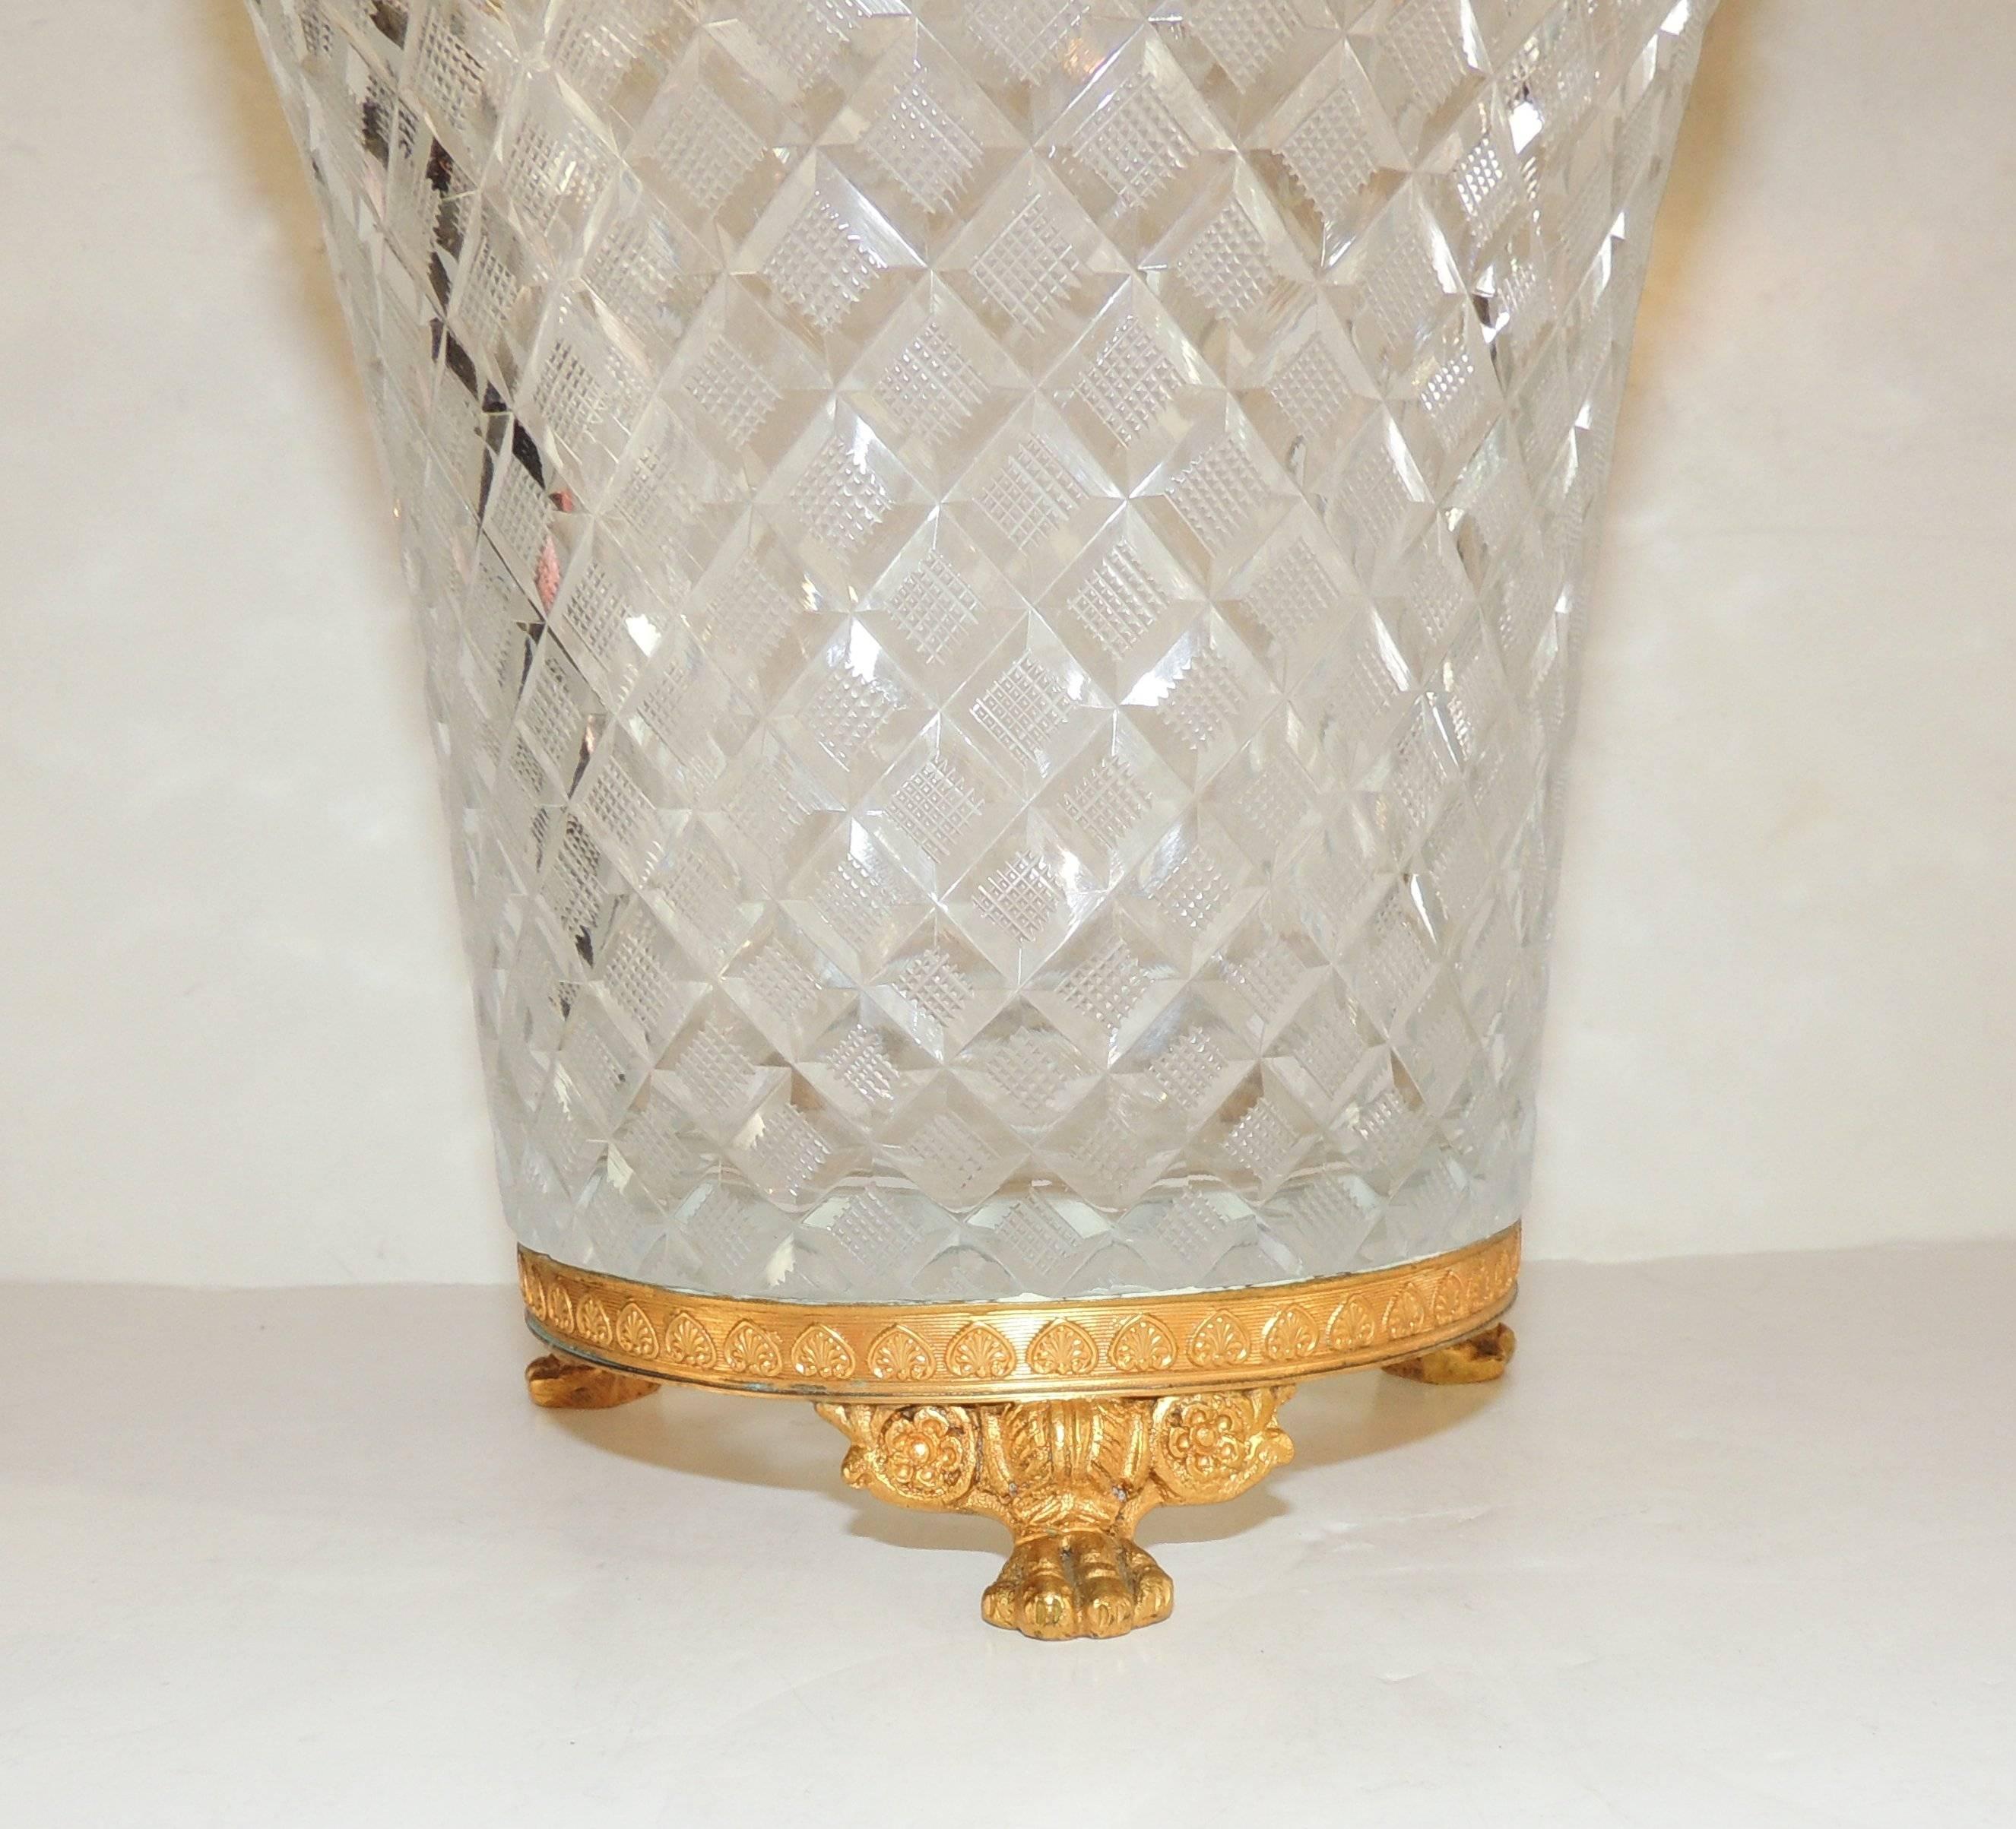 Faceted Wonderful French Baccarat Doré Bronze Ormolu Diamond Cut Crystal Ice Bucket Vase